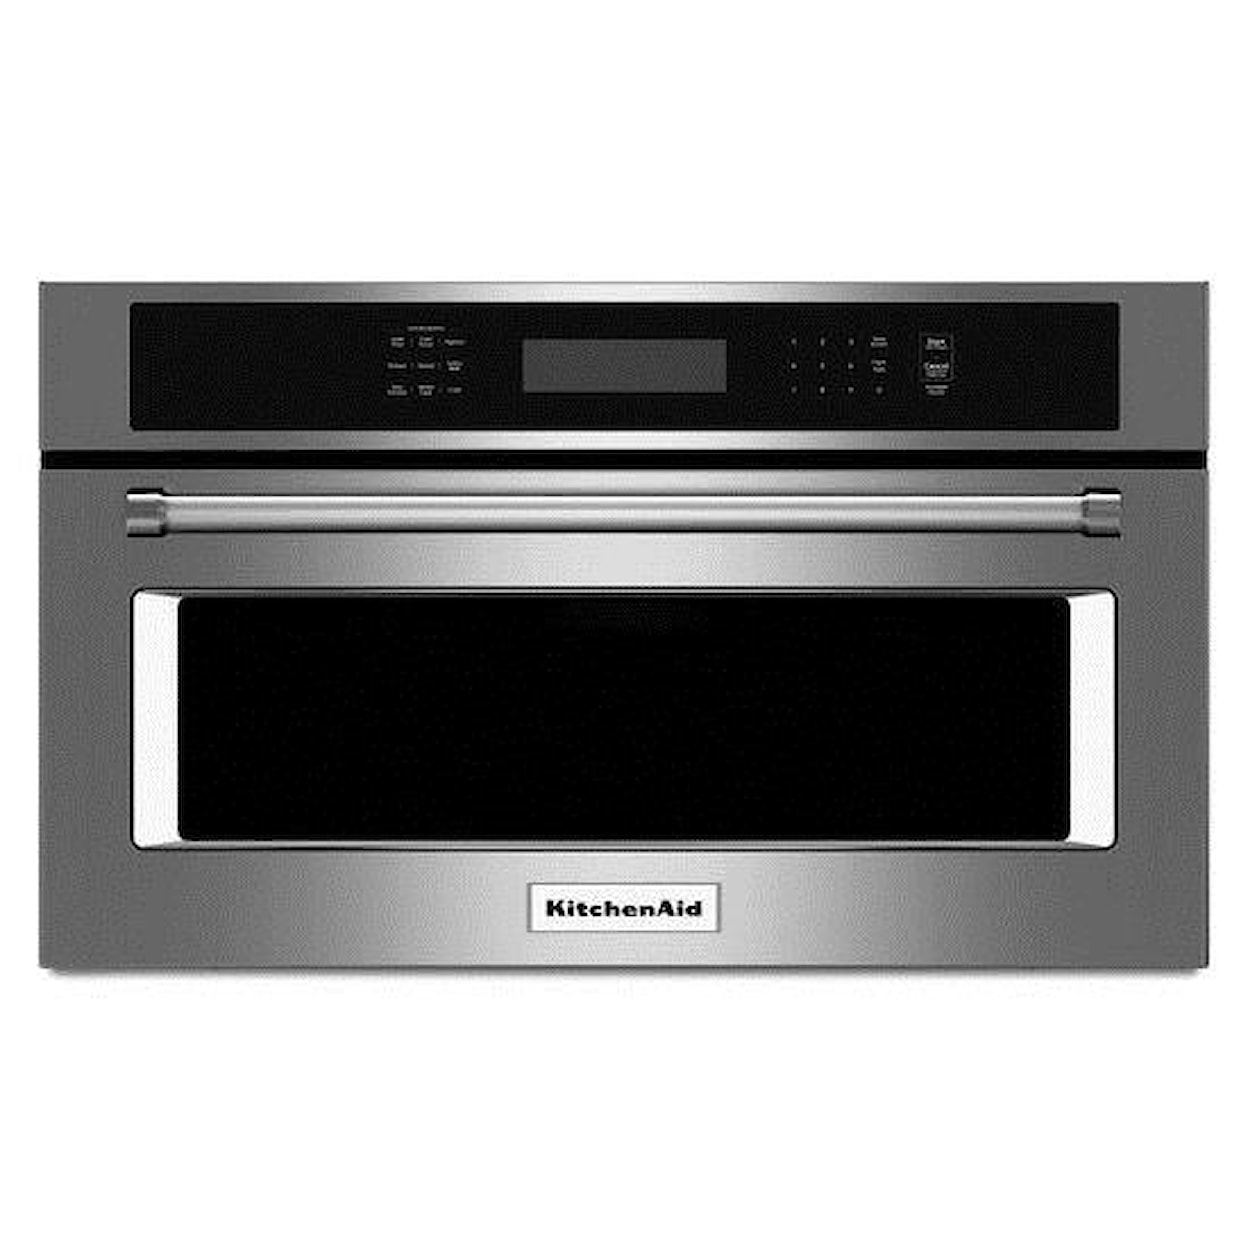 KitchenAid Microwaves - Kitchenaid 30" Built-In Microwave Oven